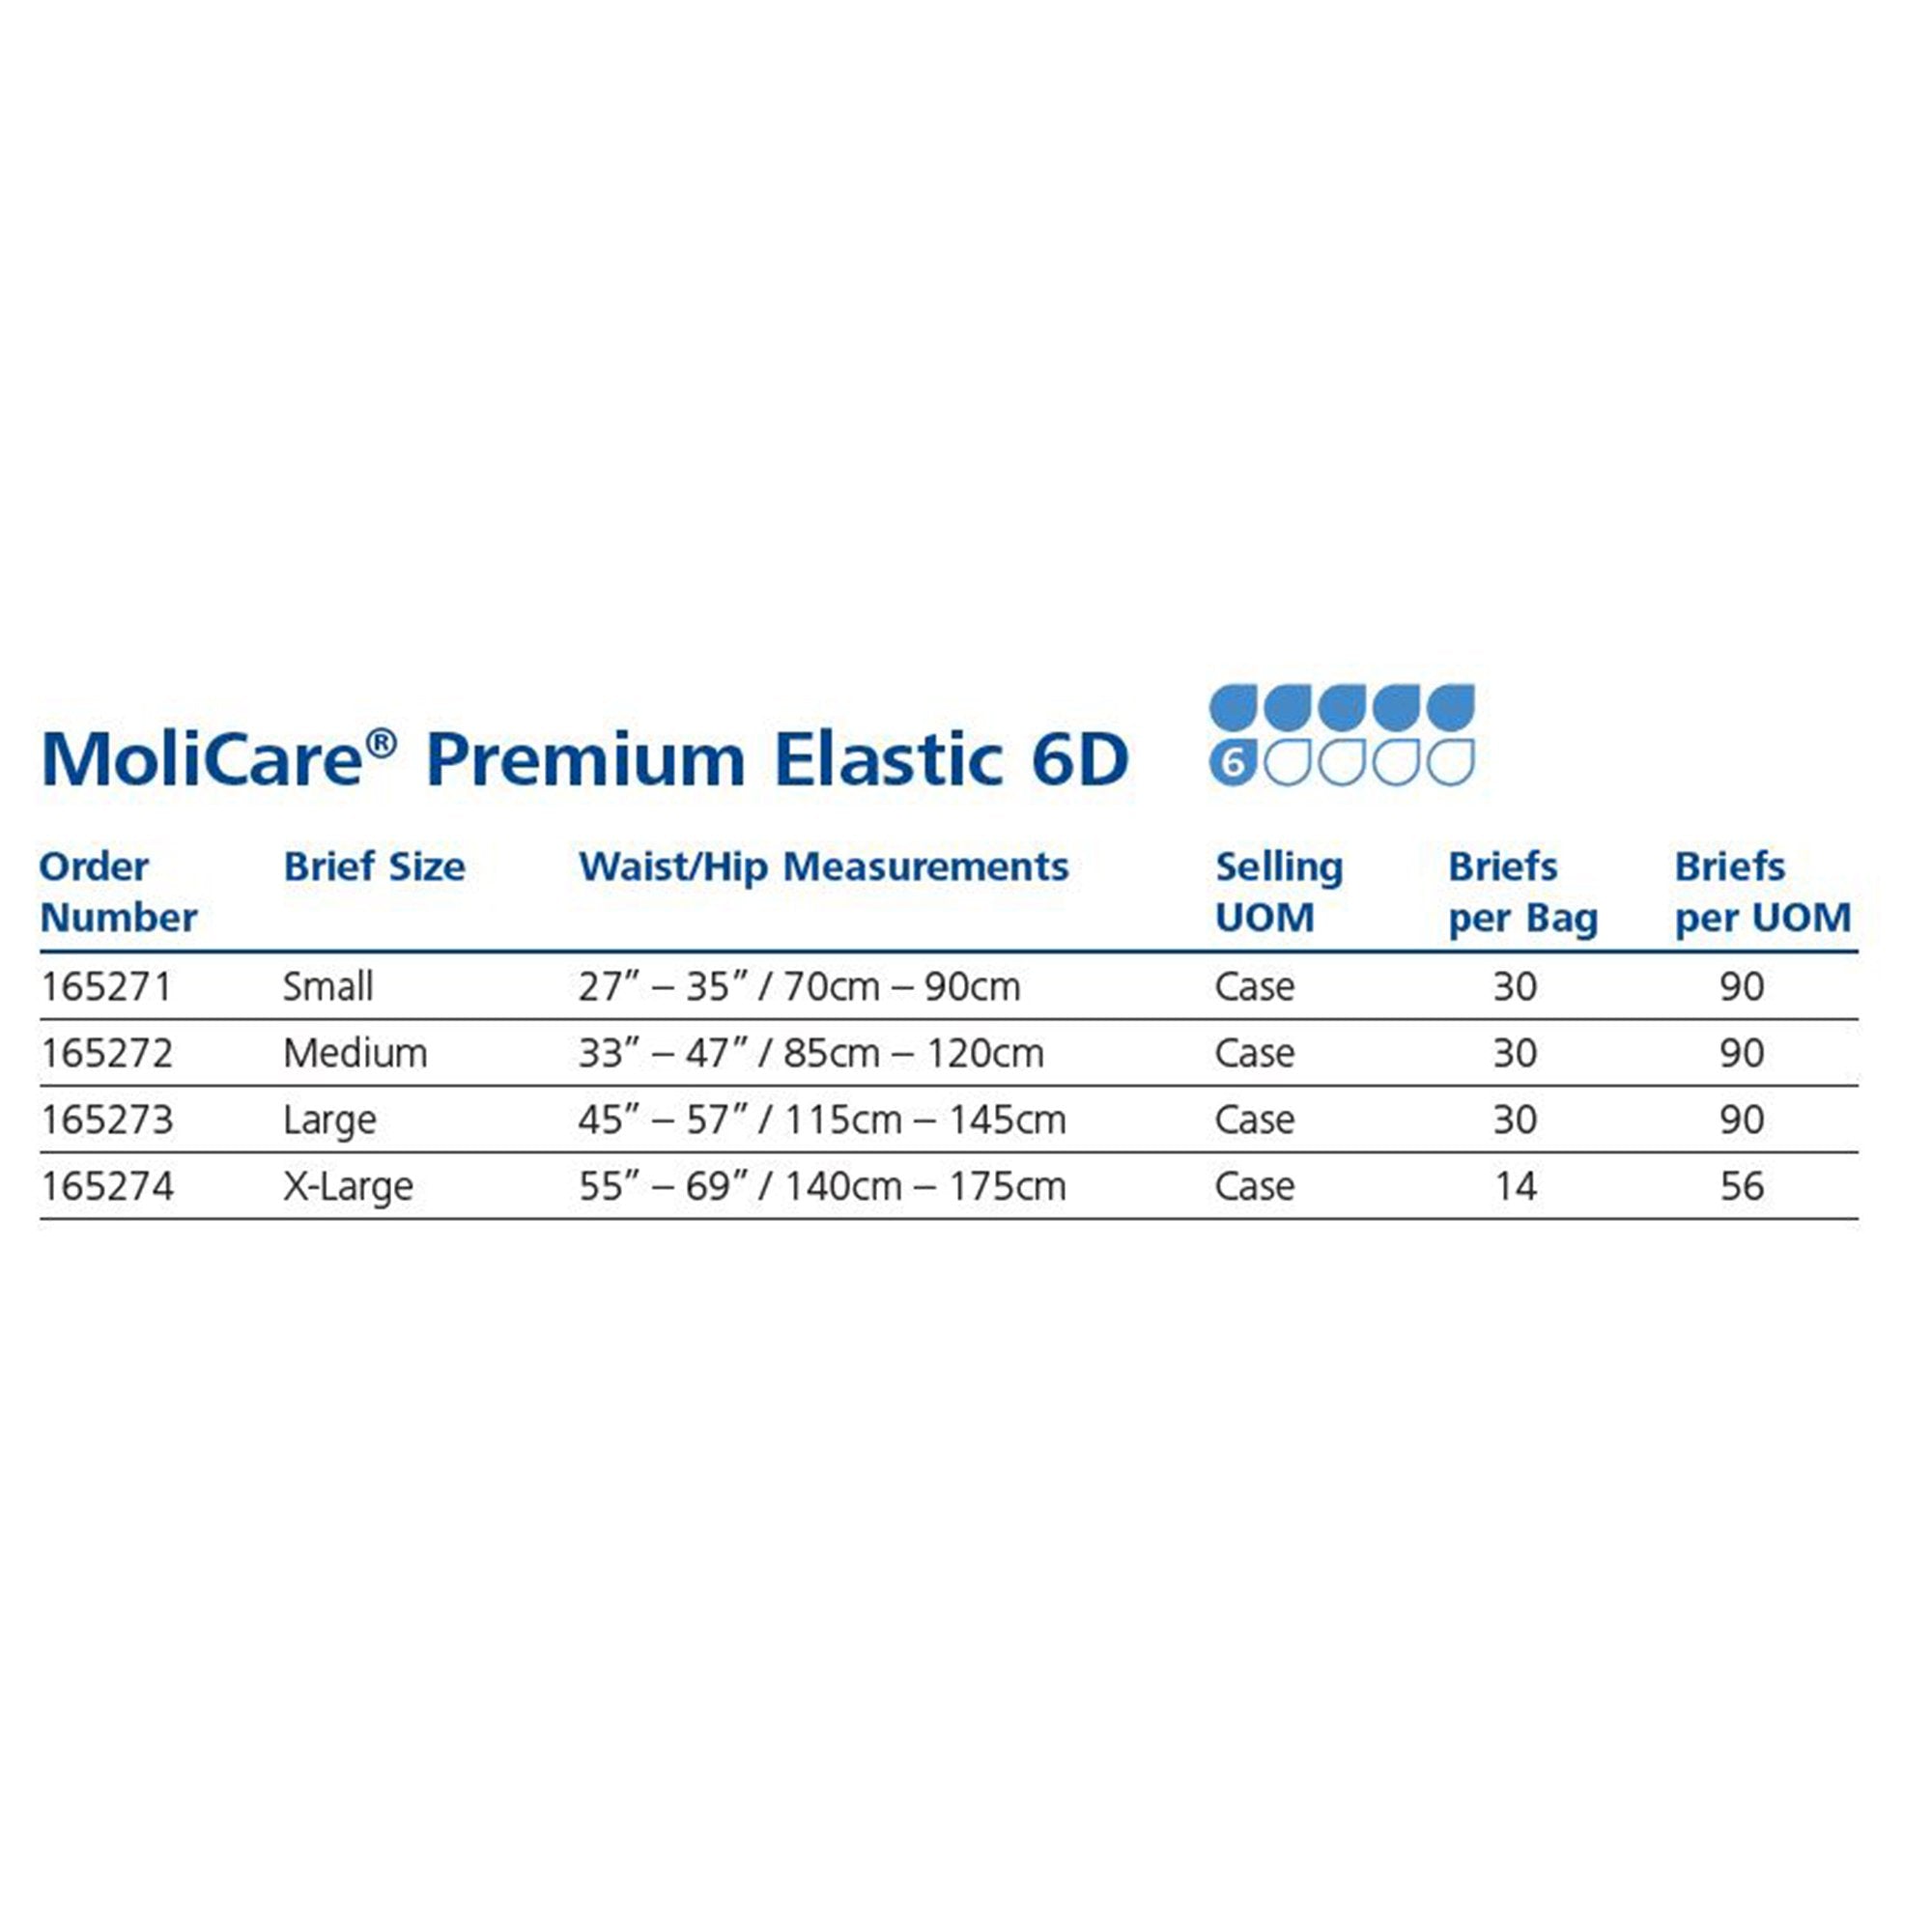 Unisex Adult Incontinence Brief MoliCare® Premium Elastic 6D Medium Disposable Moderate Absorbency